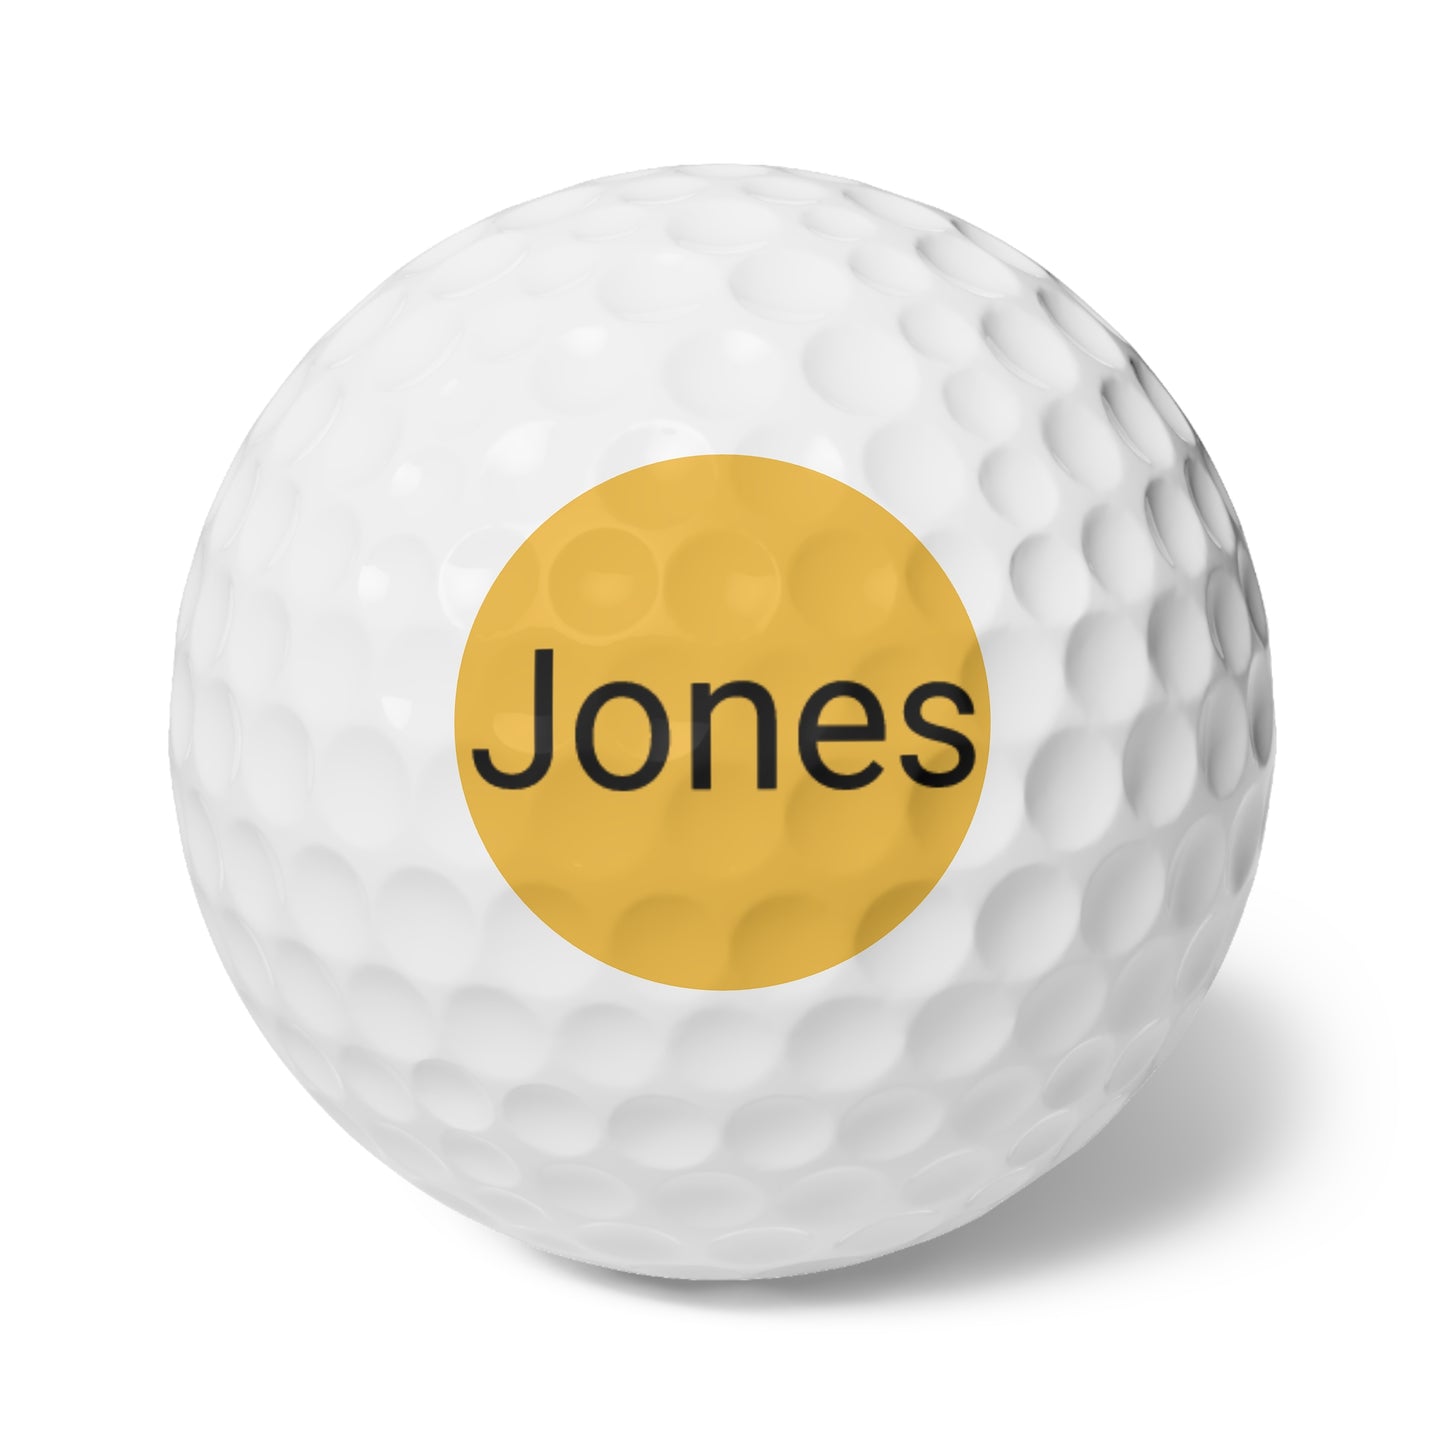 Personalized Name Golf Balls, 6 balls